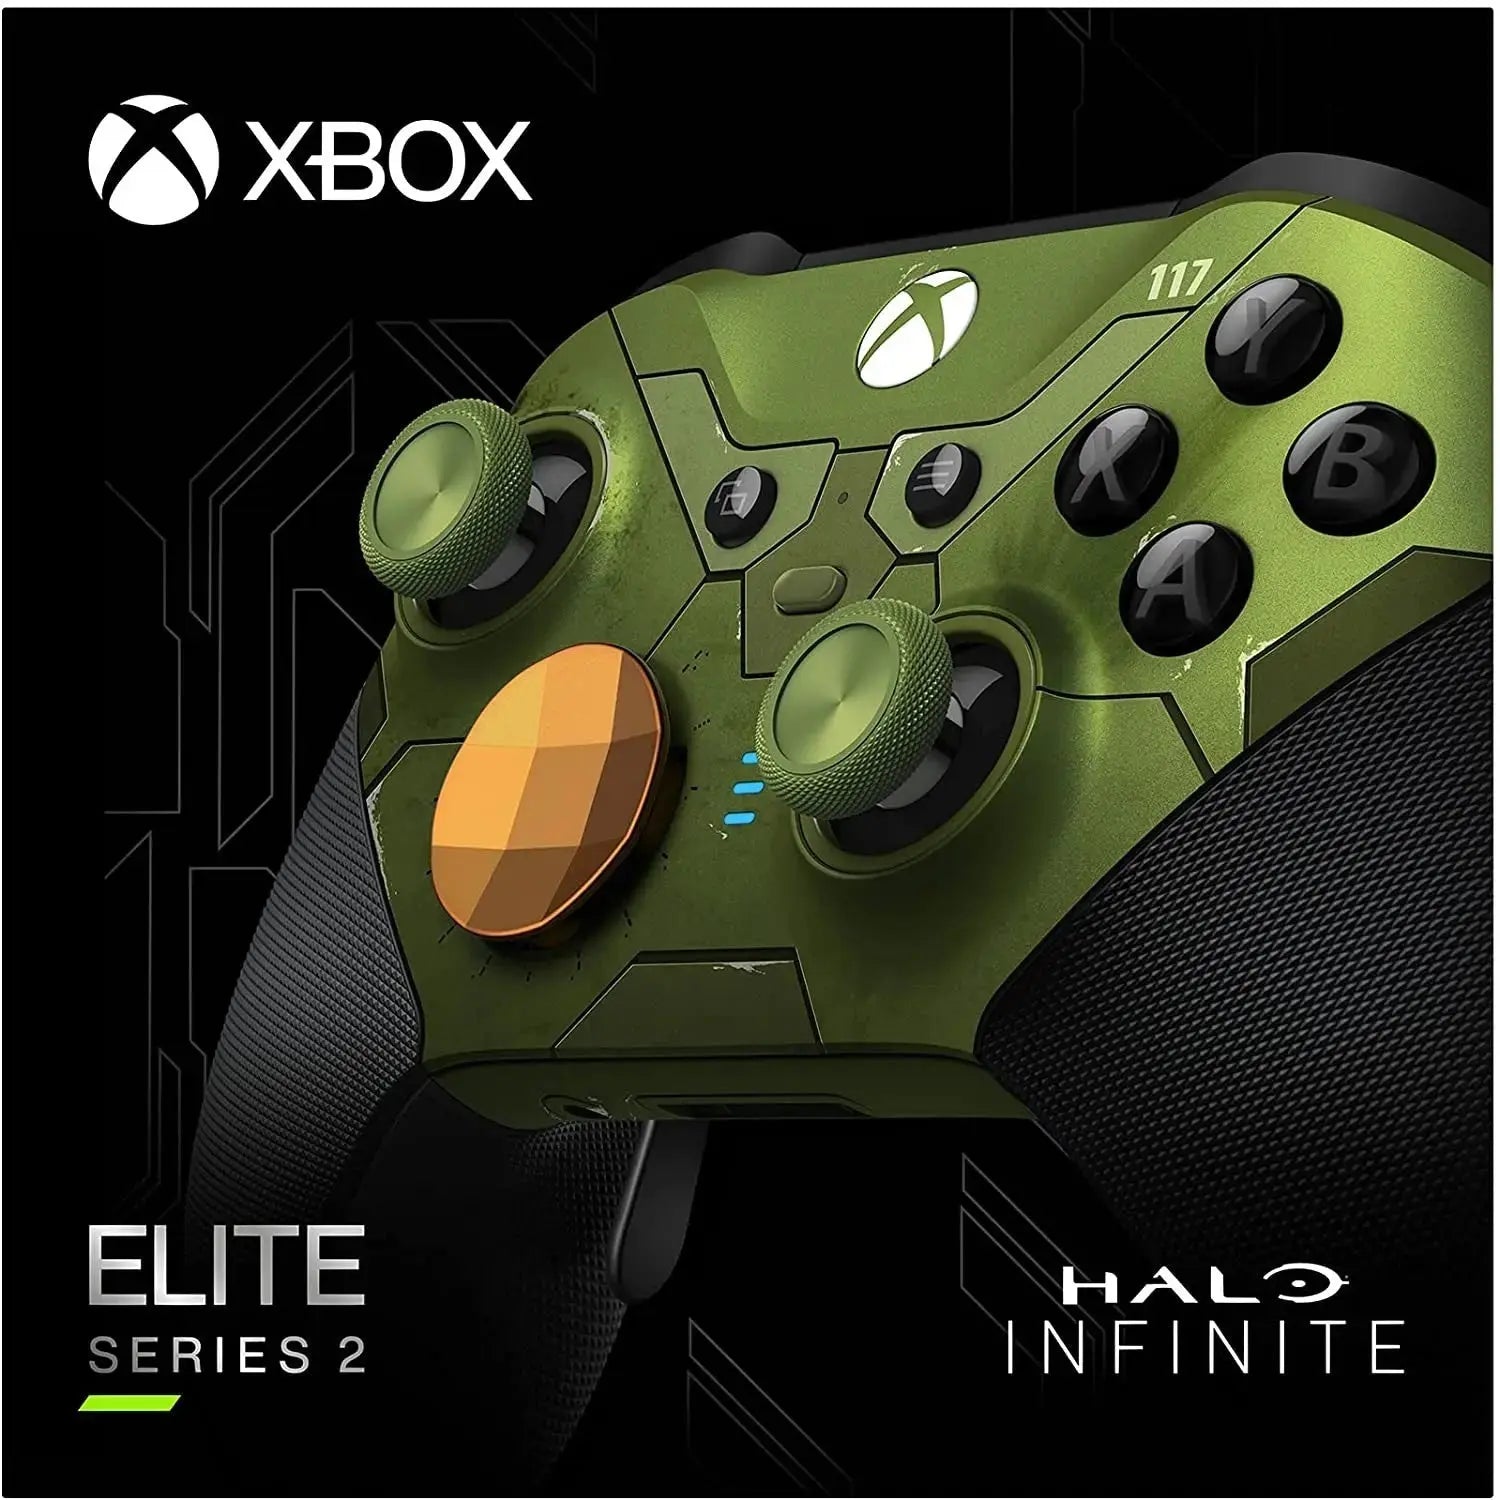 Xbox Elite Wireless Controller Series 2 - Halo Infinite Limited Edition  889842640953 freeshipping - Tecin.fr – TECIN HOLDING